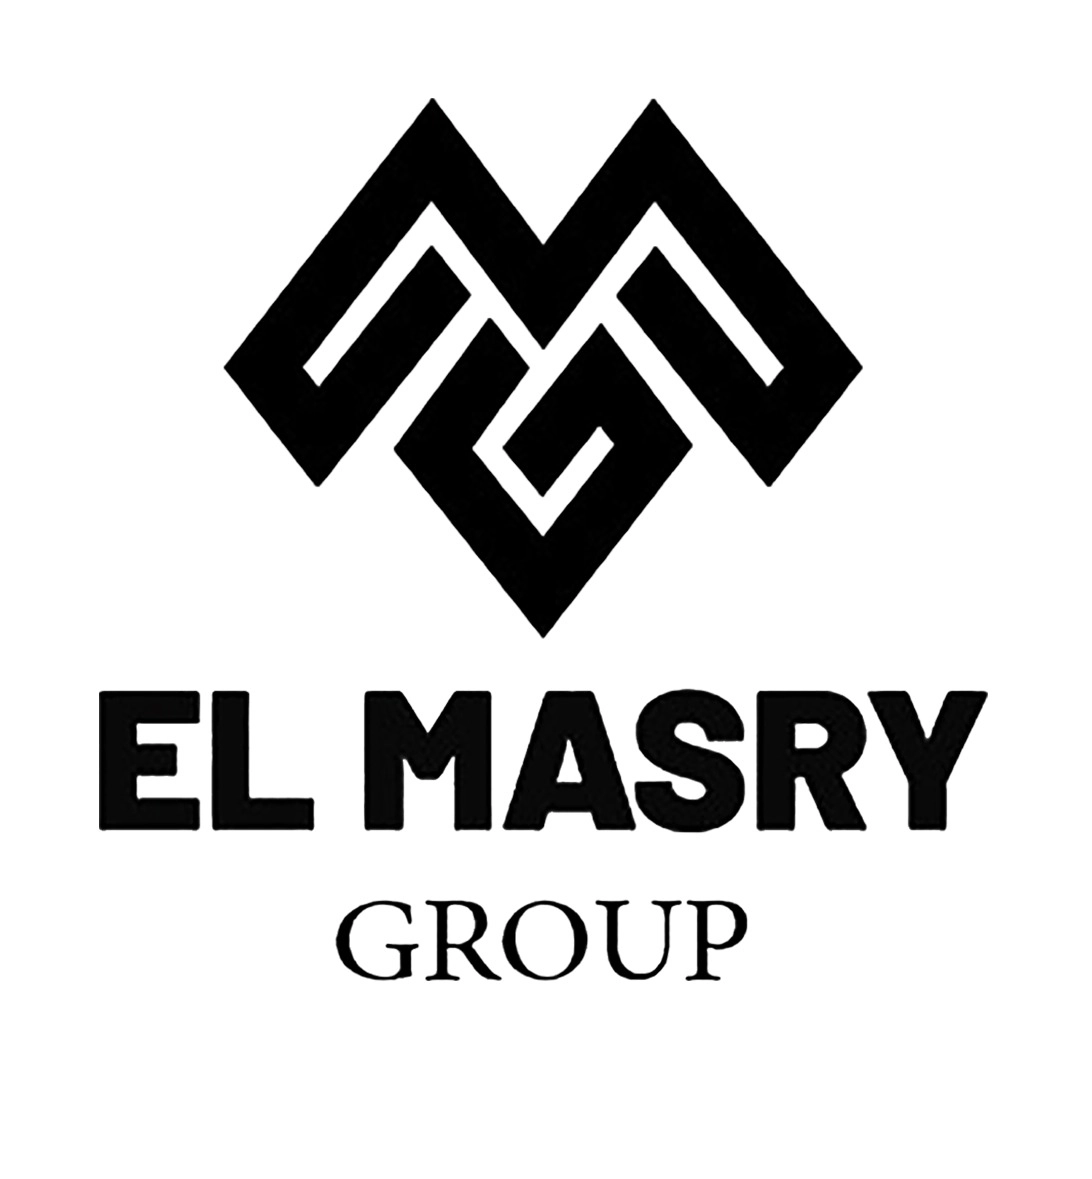 El Masry Group